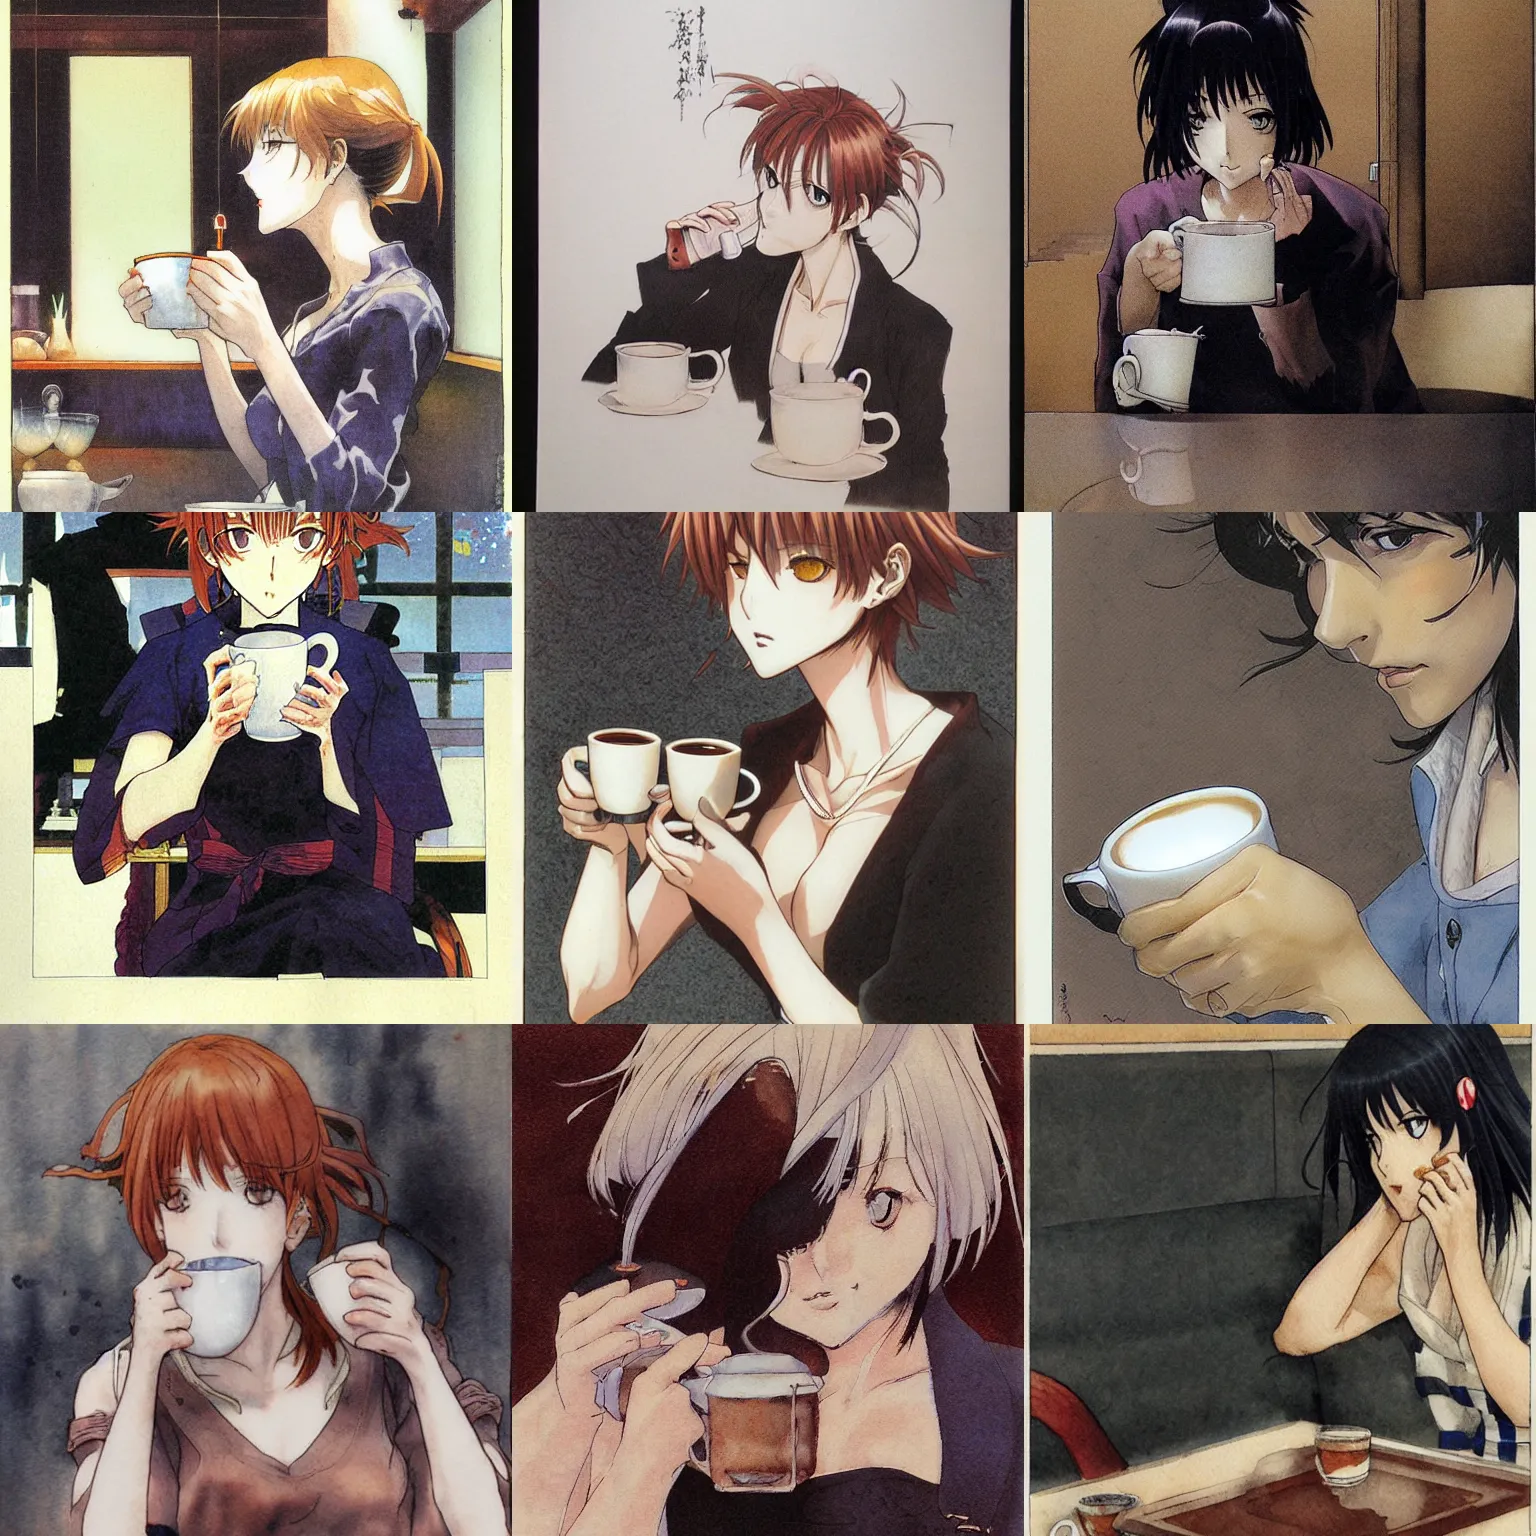 Prompt: woman drinking coffee, by yoshiyuki sadamoto